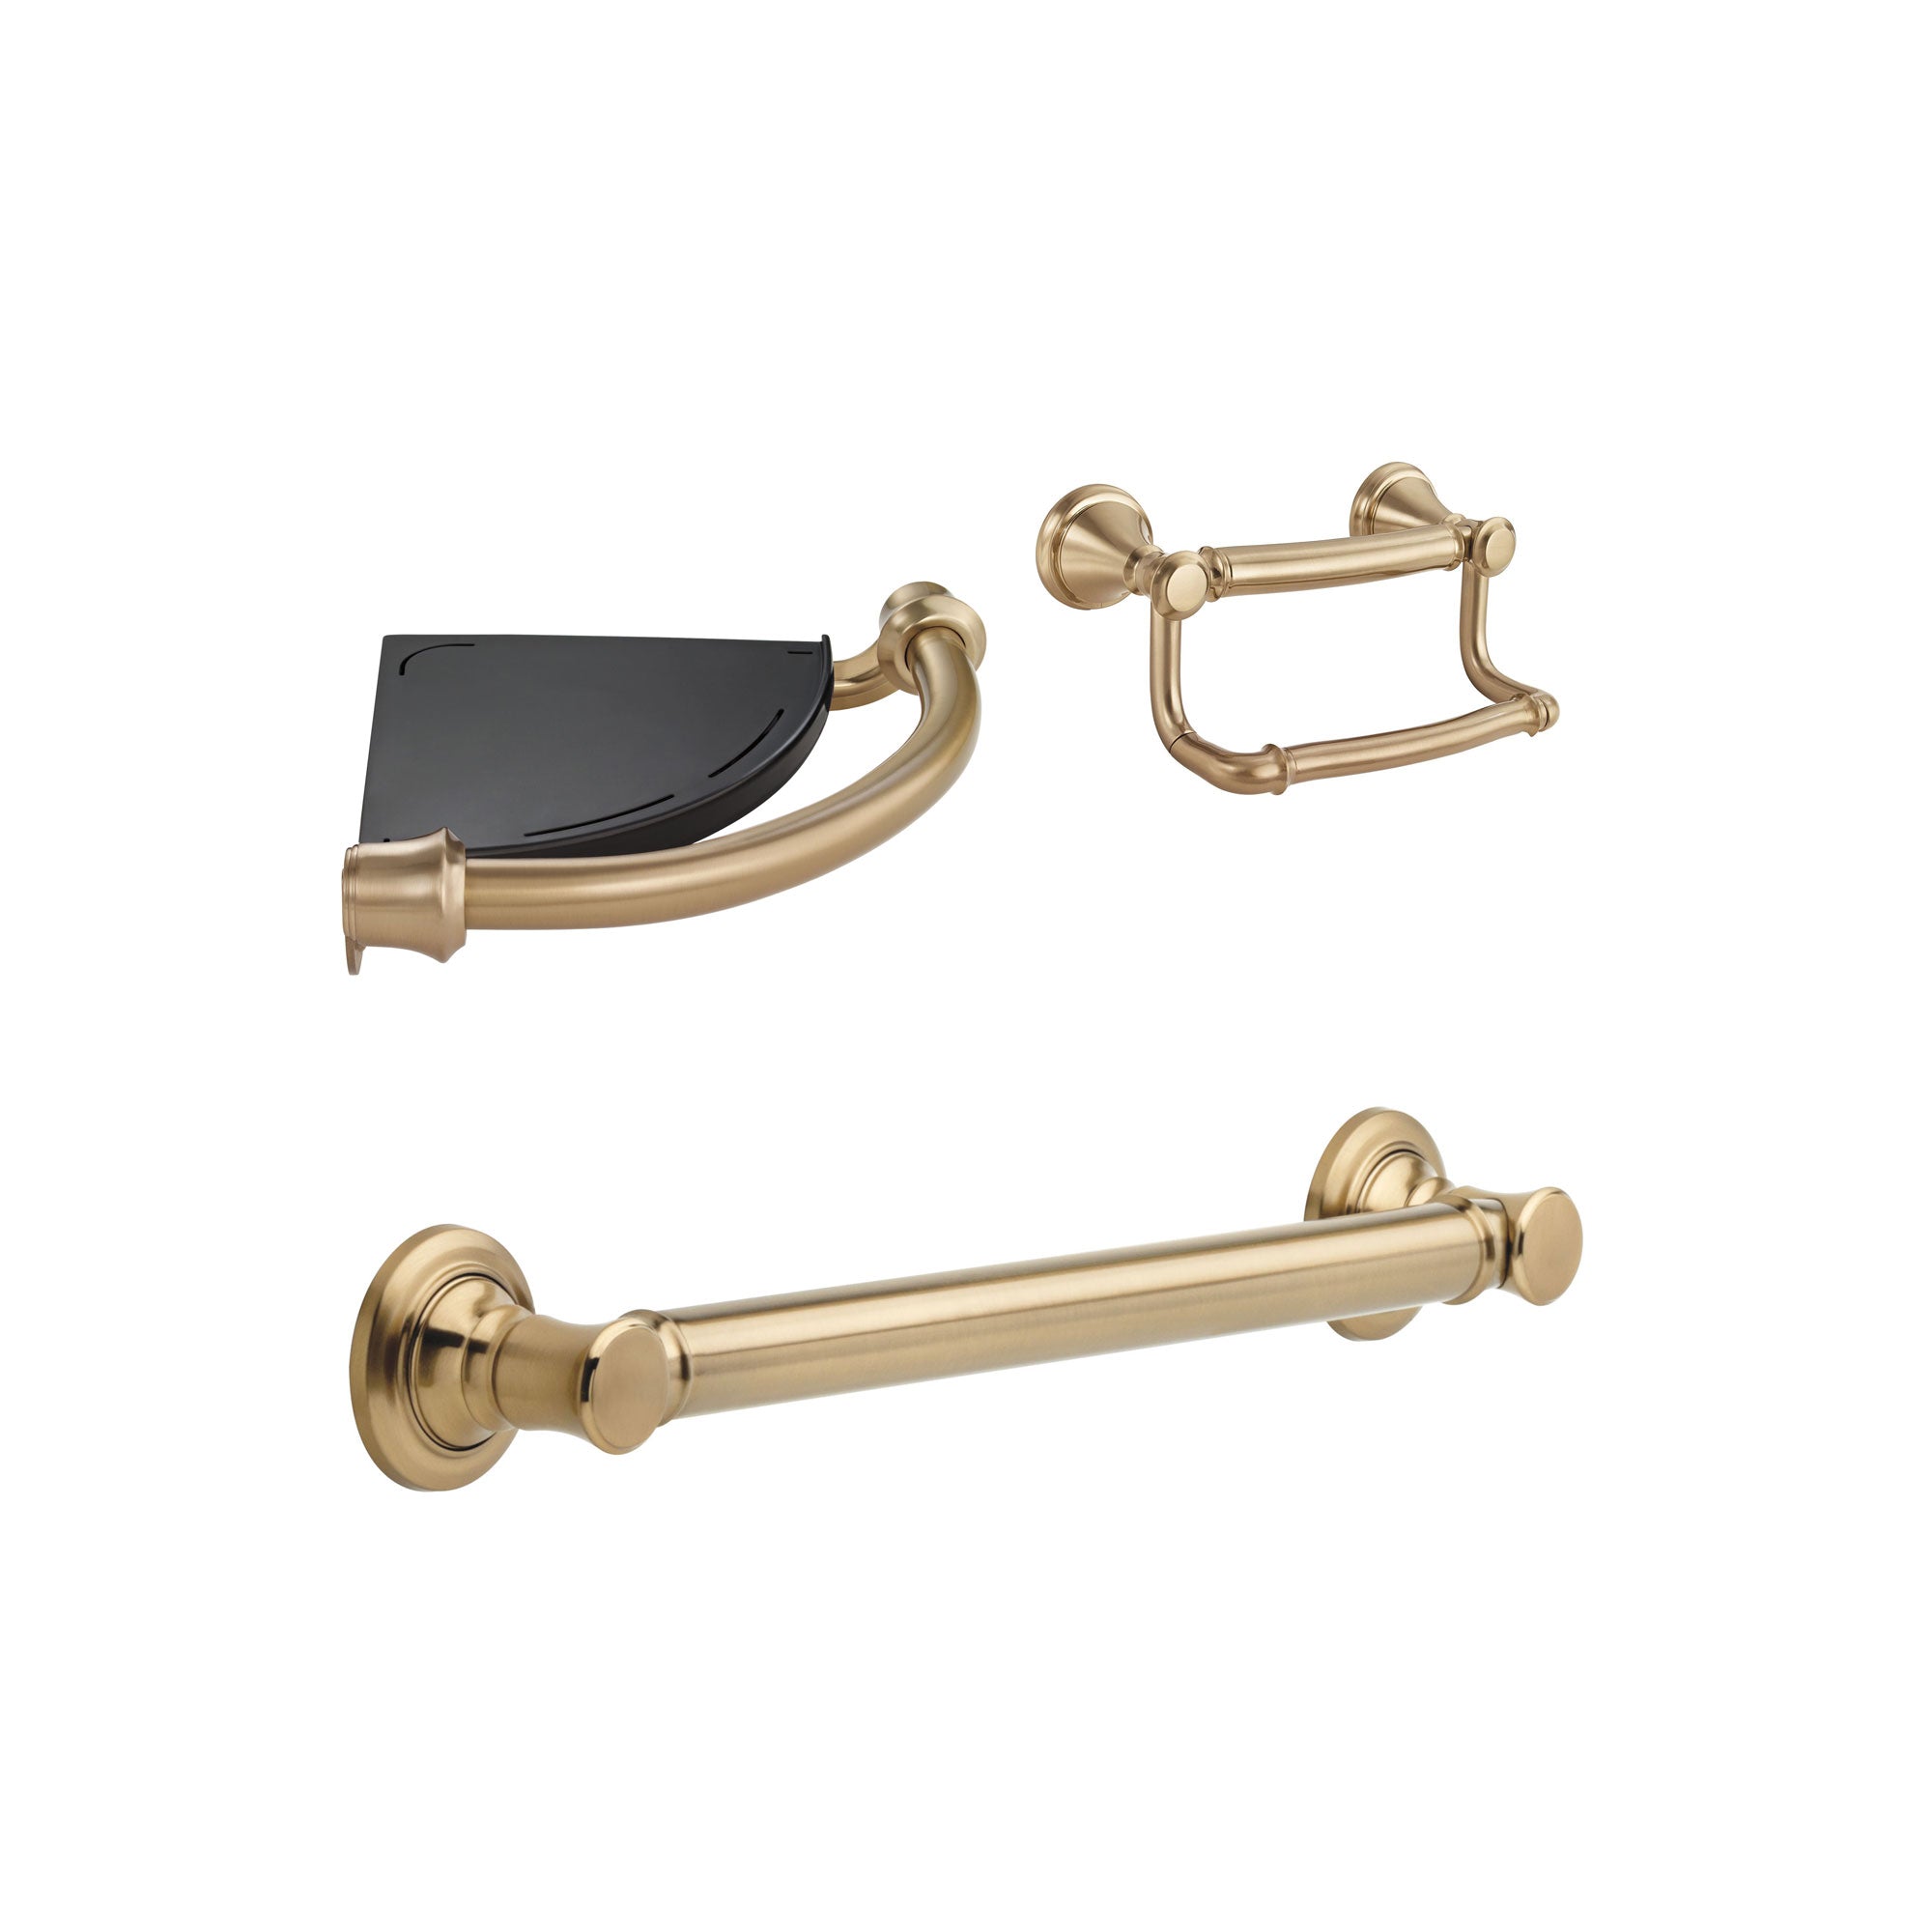 Delta Bath Safety Champagne Bronze BASICS Bath Accessory Set Includes: 